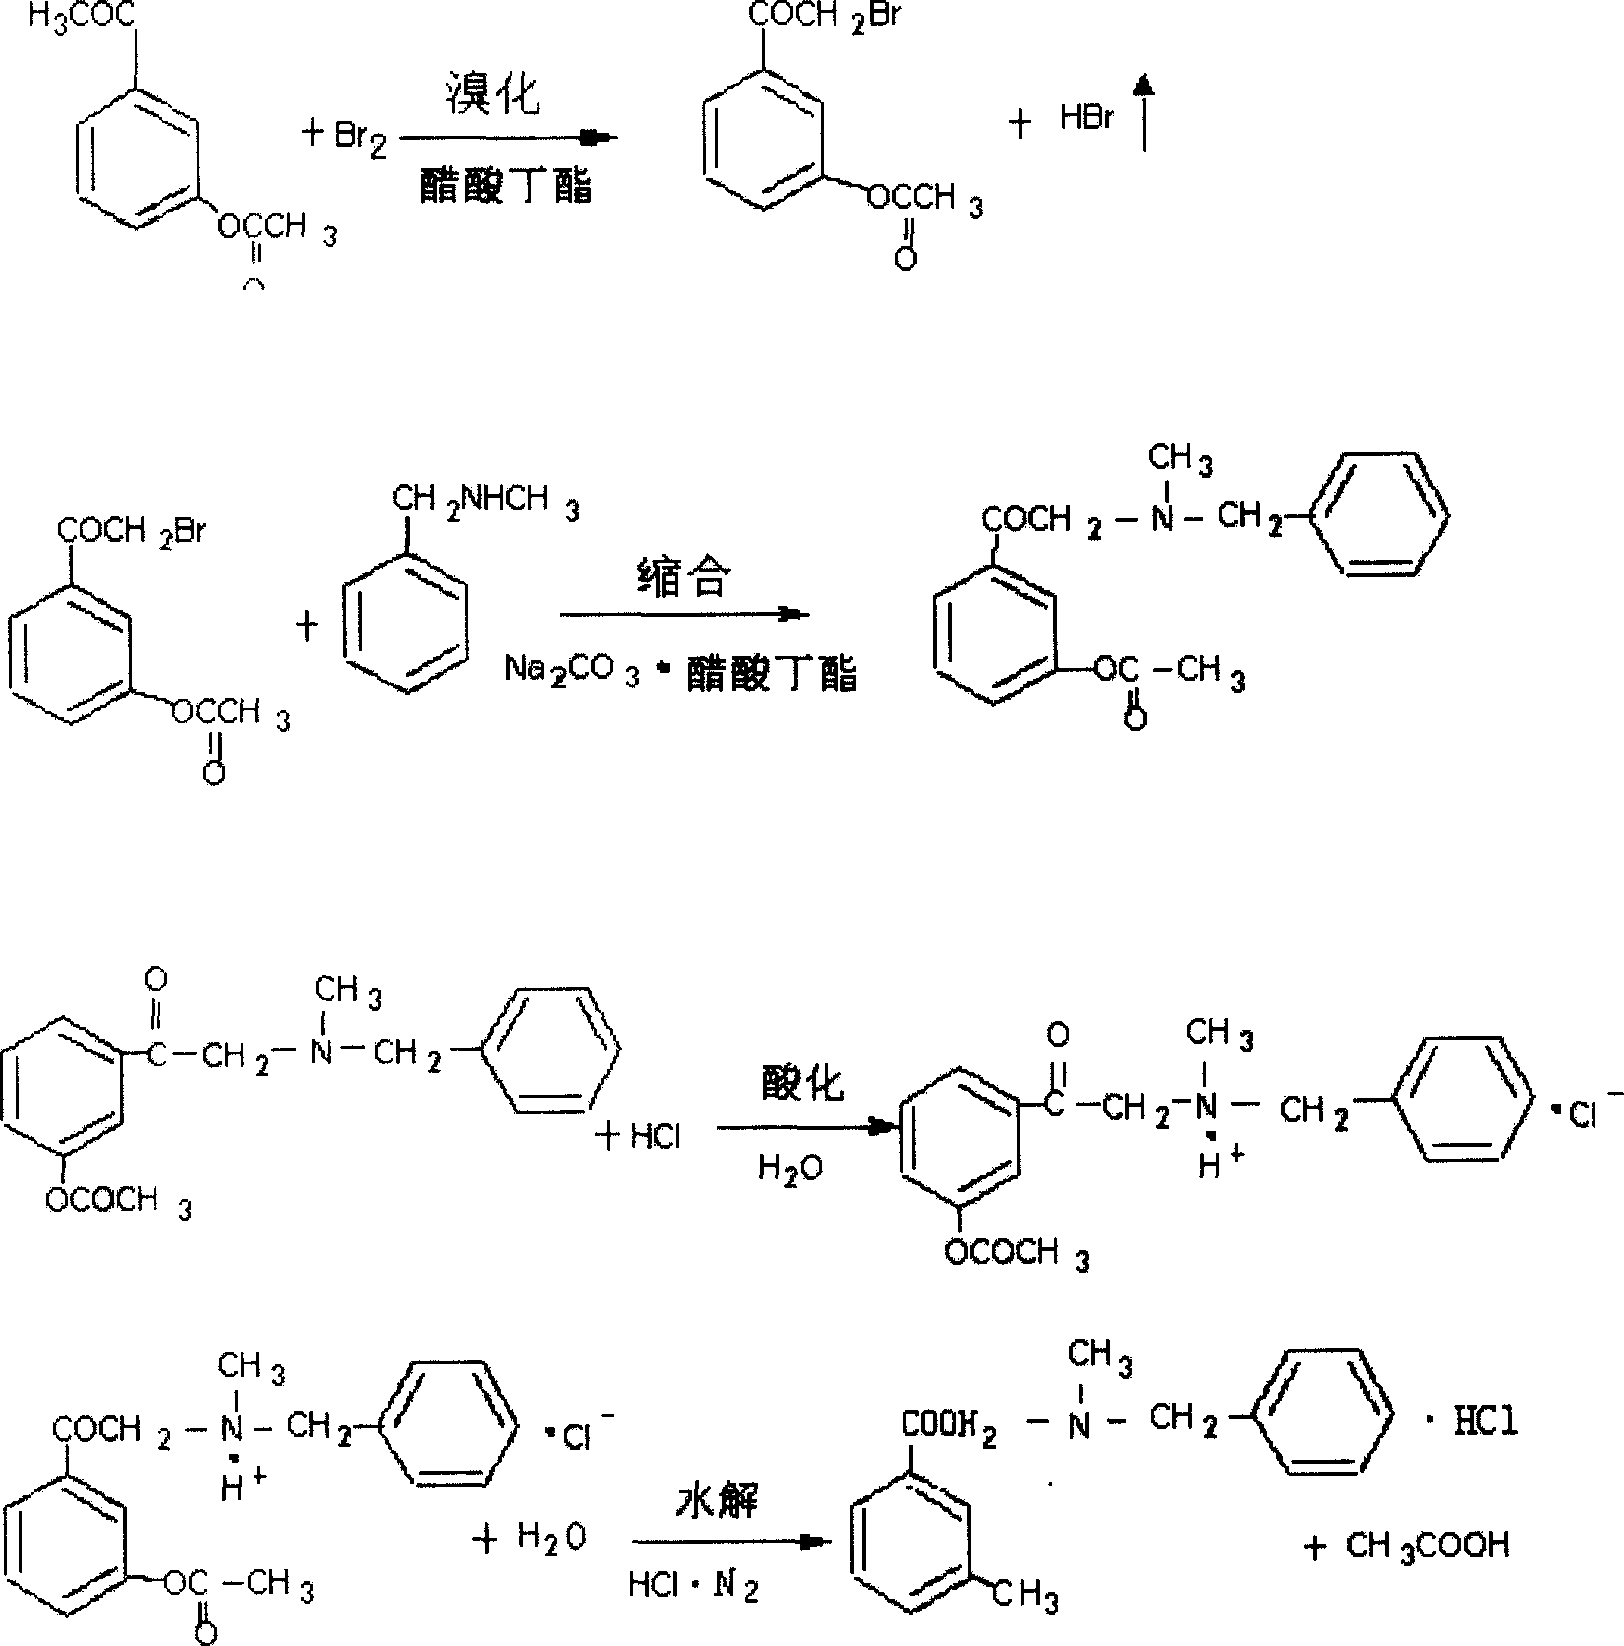 Process of synthesizing alpha-(N-methyl-N-benzylamin)-3-hydroxy acetophenone hydrochloride